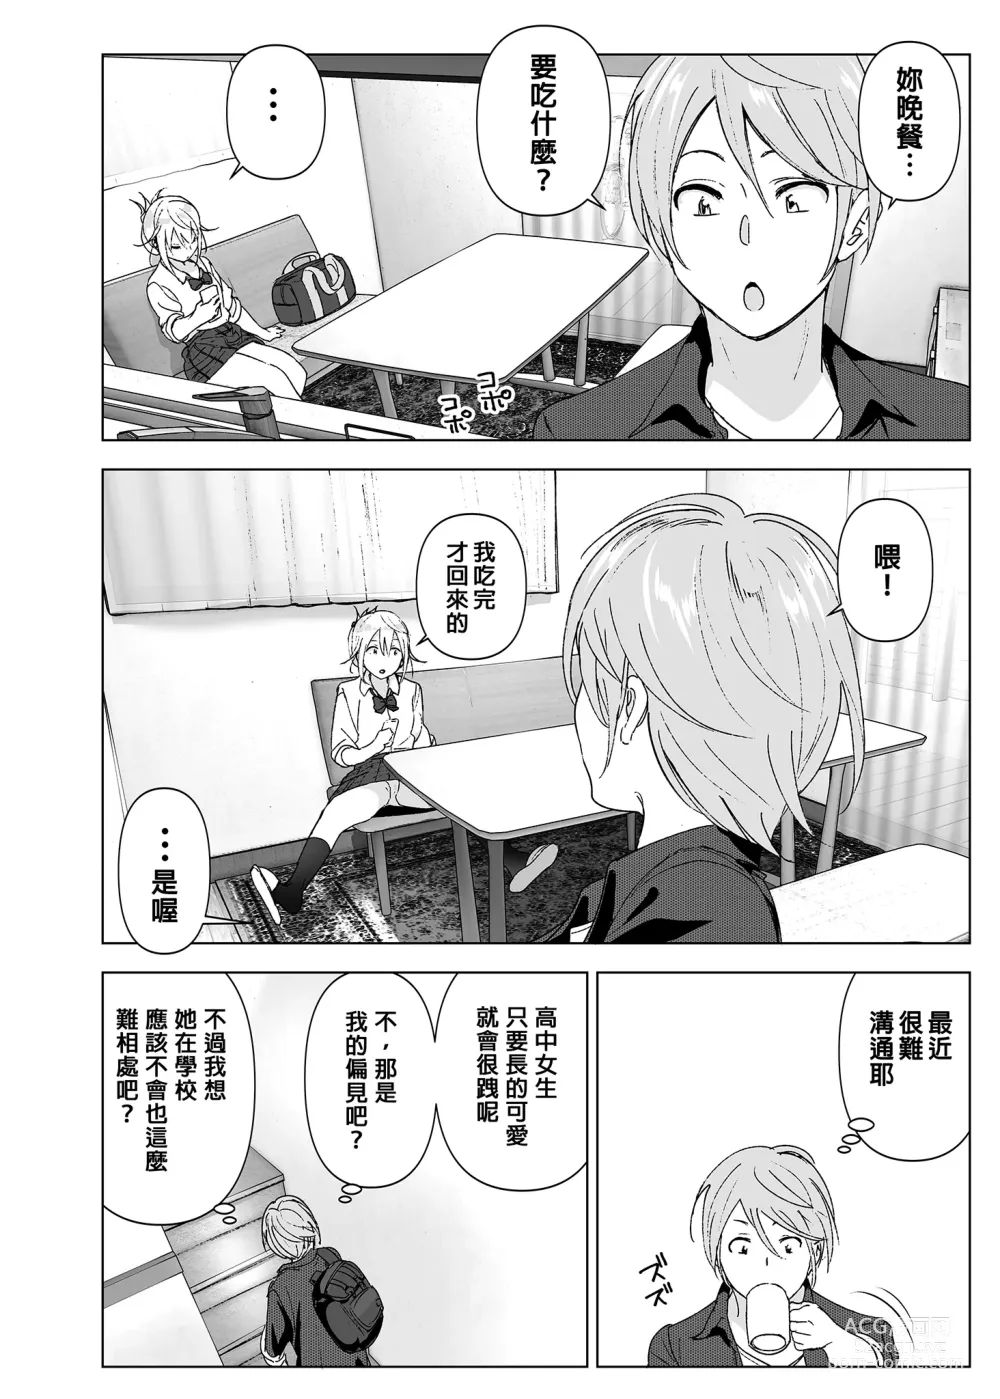 Page 3 of doujinshi 以前明明那麼可愛 (decensored)